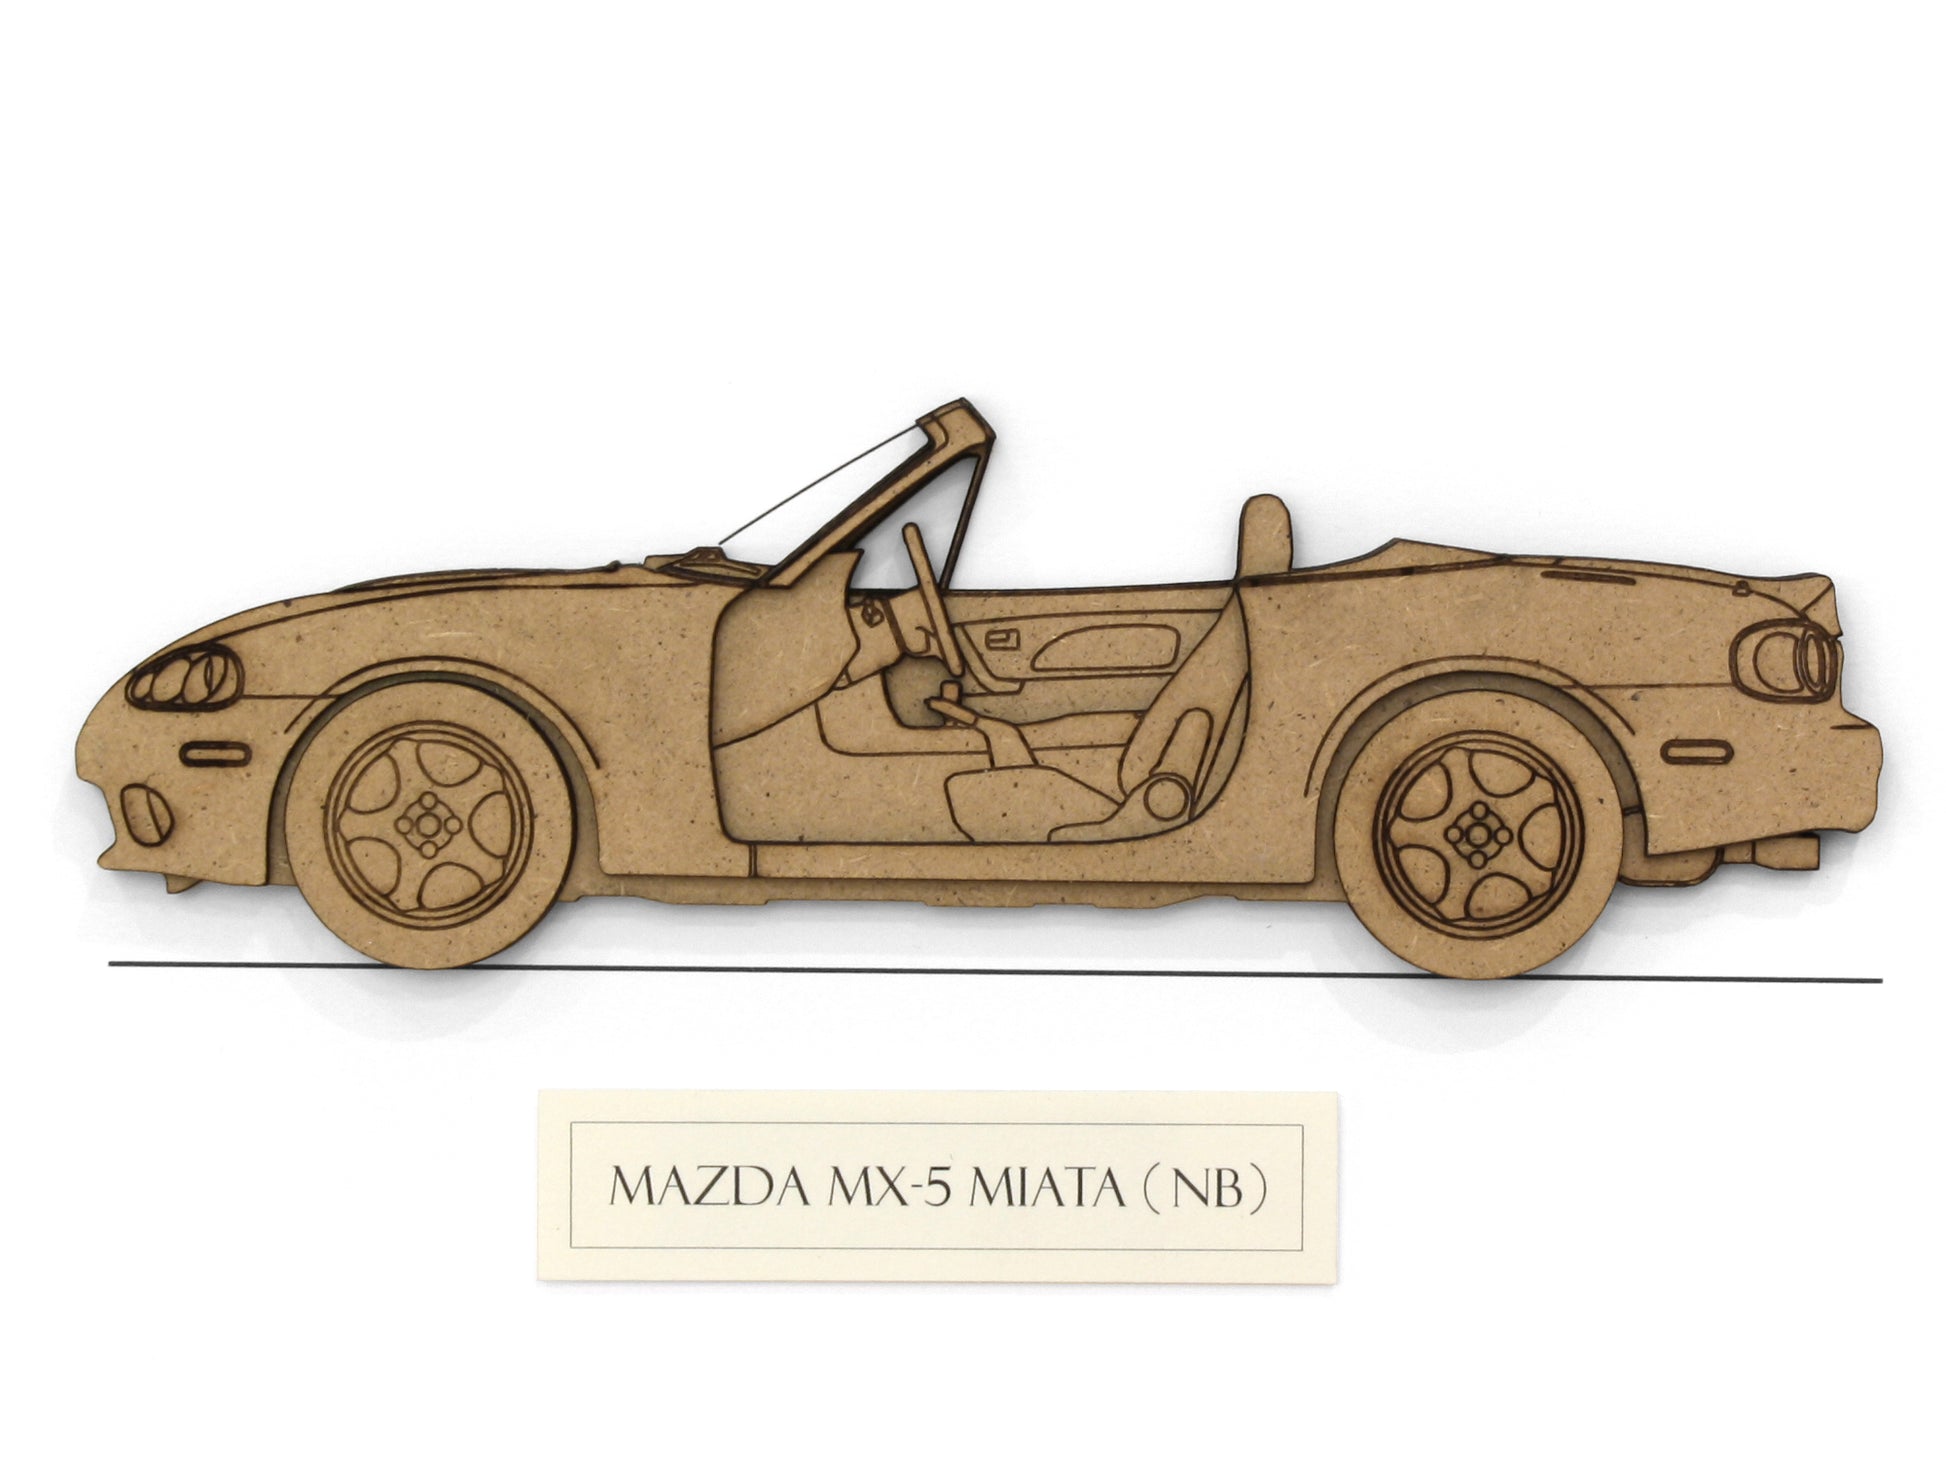 Mazda Mx-5 Miata NB gift